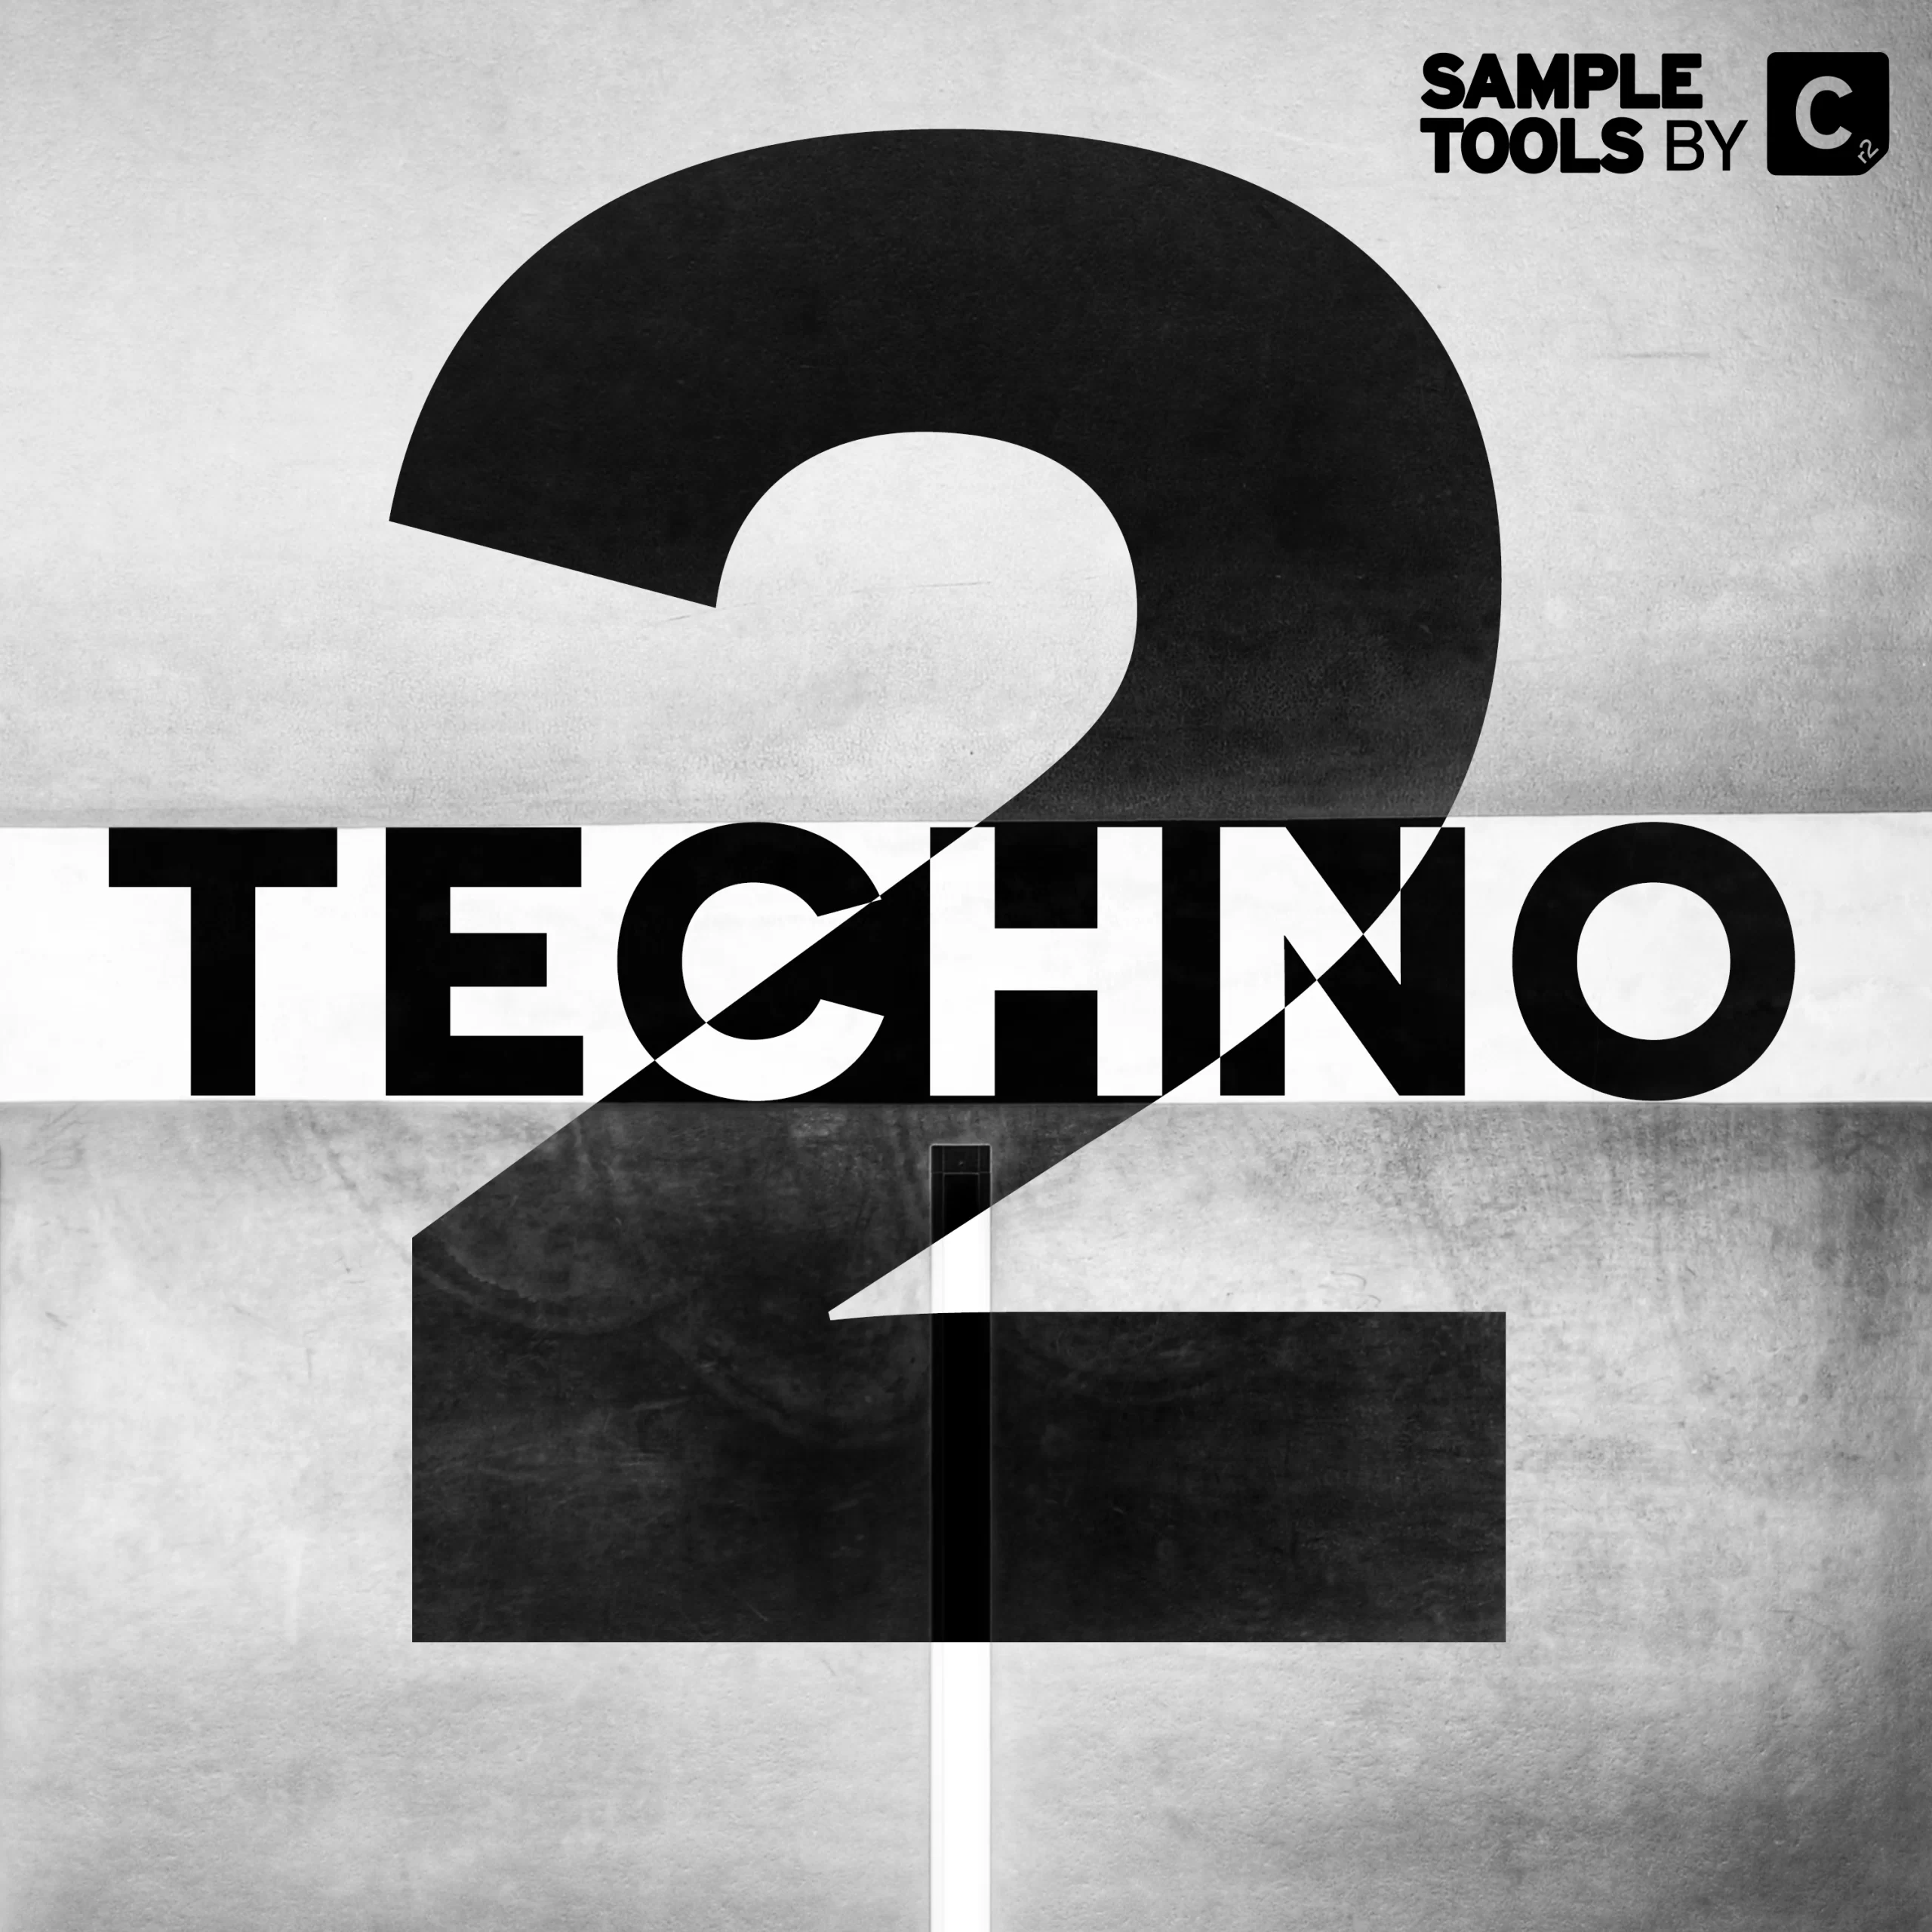 Techno 2 обложка. Techno Tools. Record Techno картинки. Tools.by. Sample tool